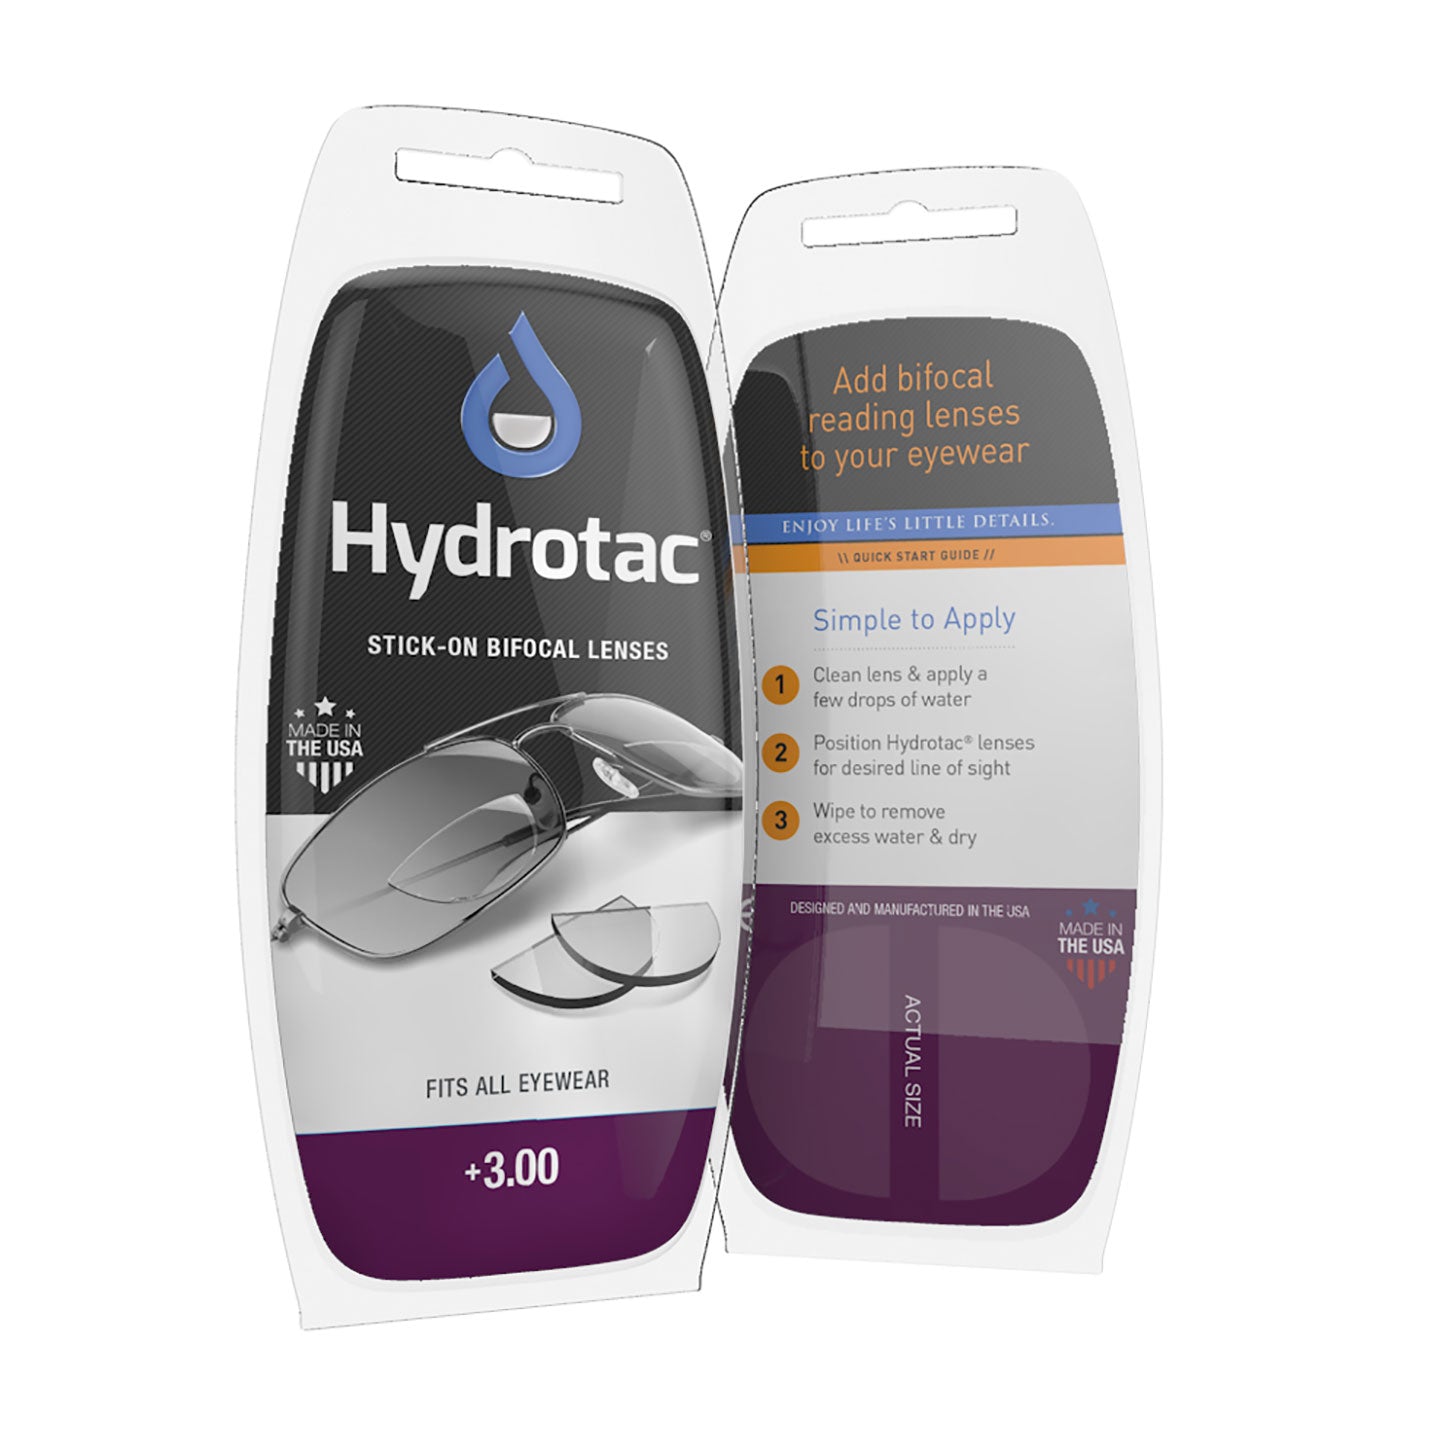 Hydrotac Stick-On Bifocal Lenses